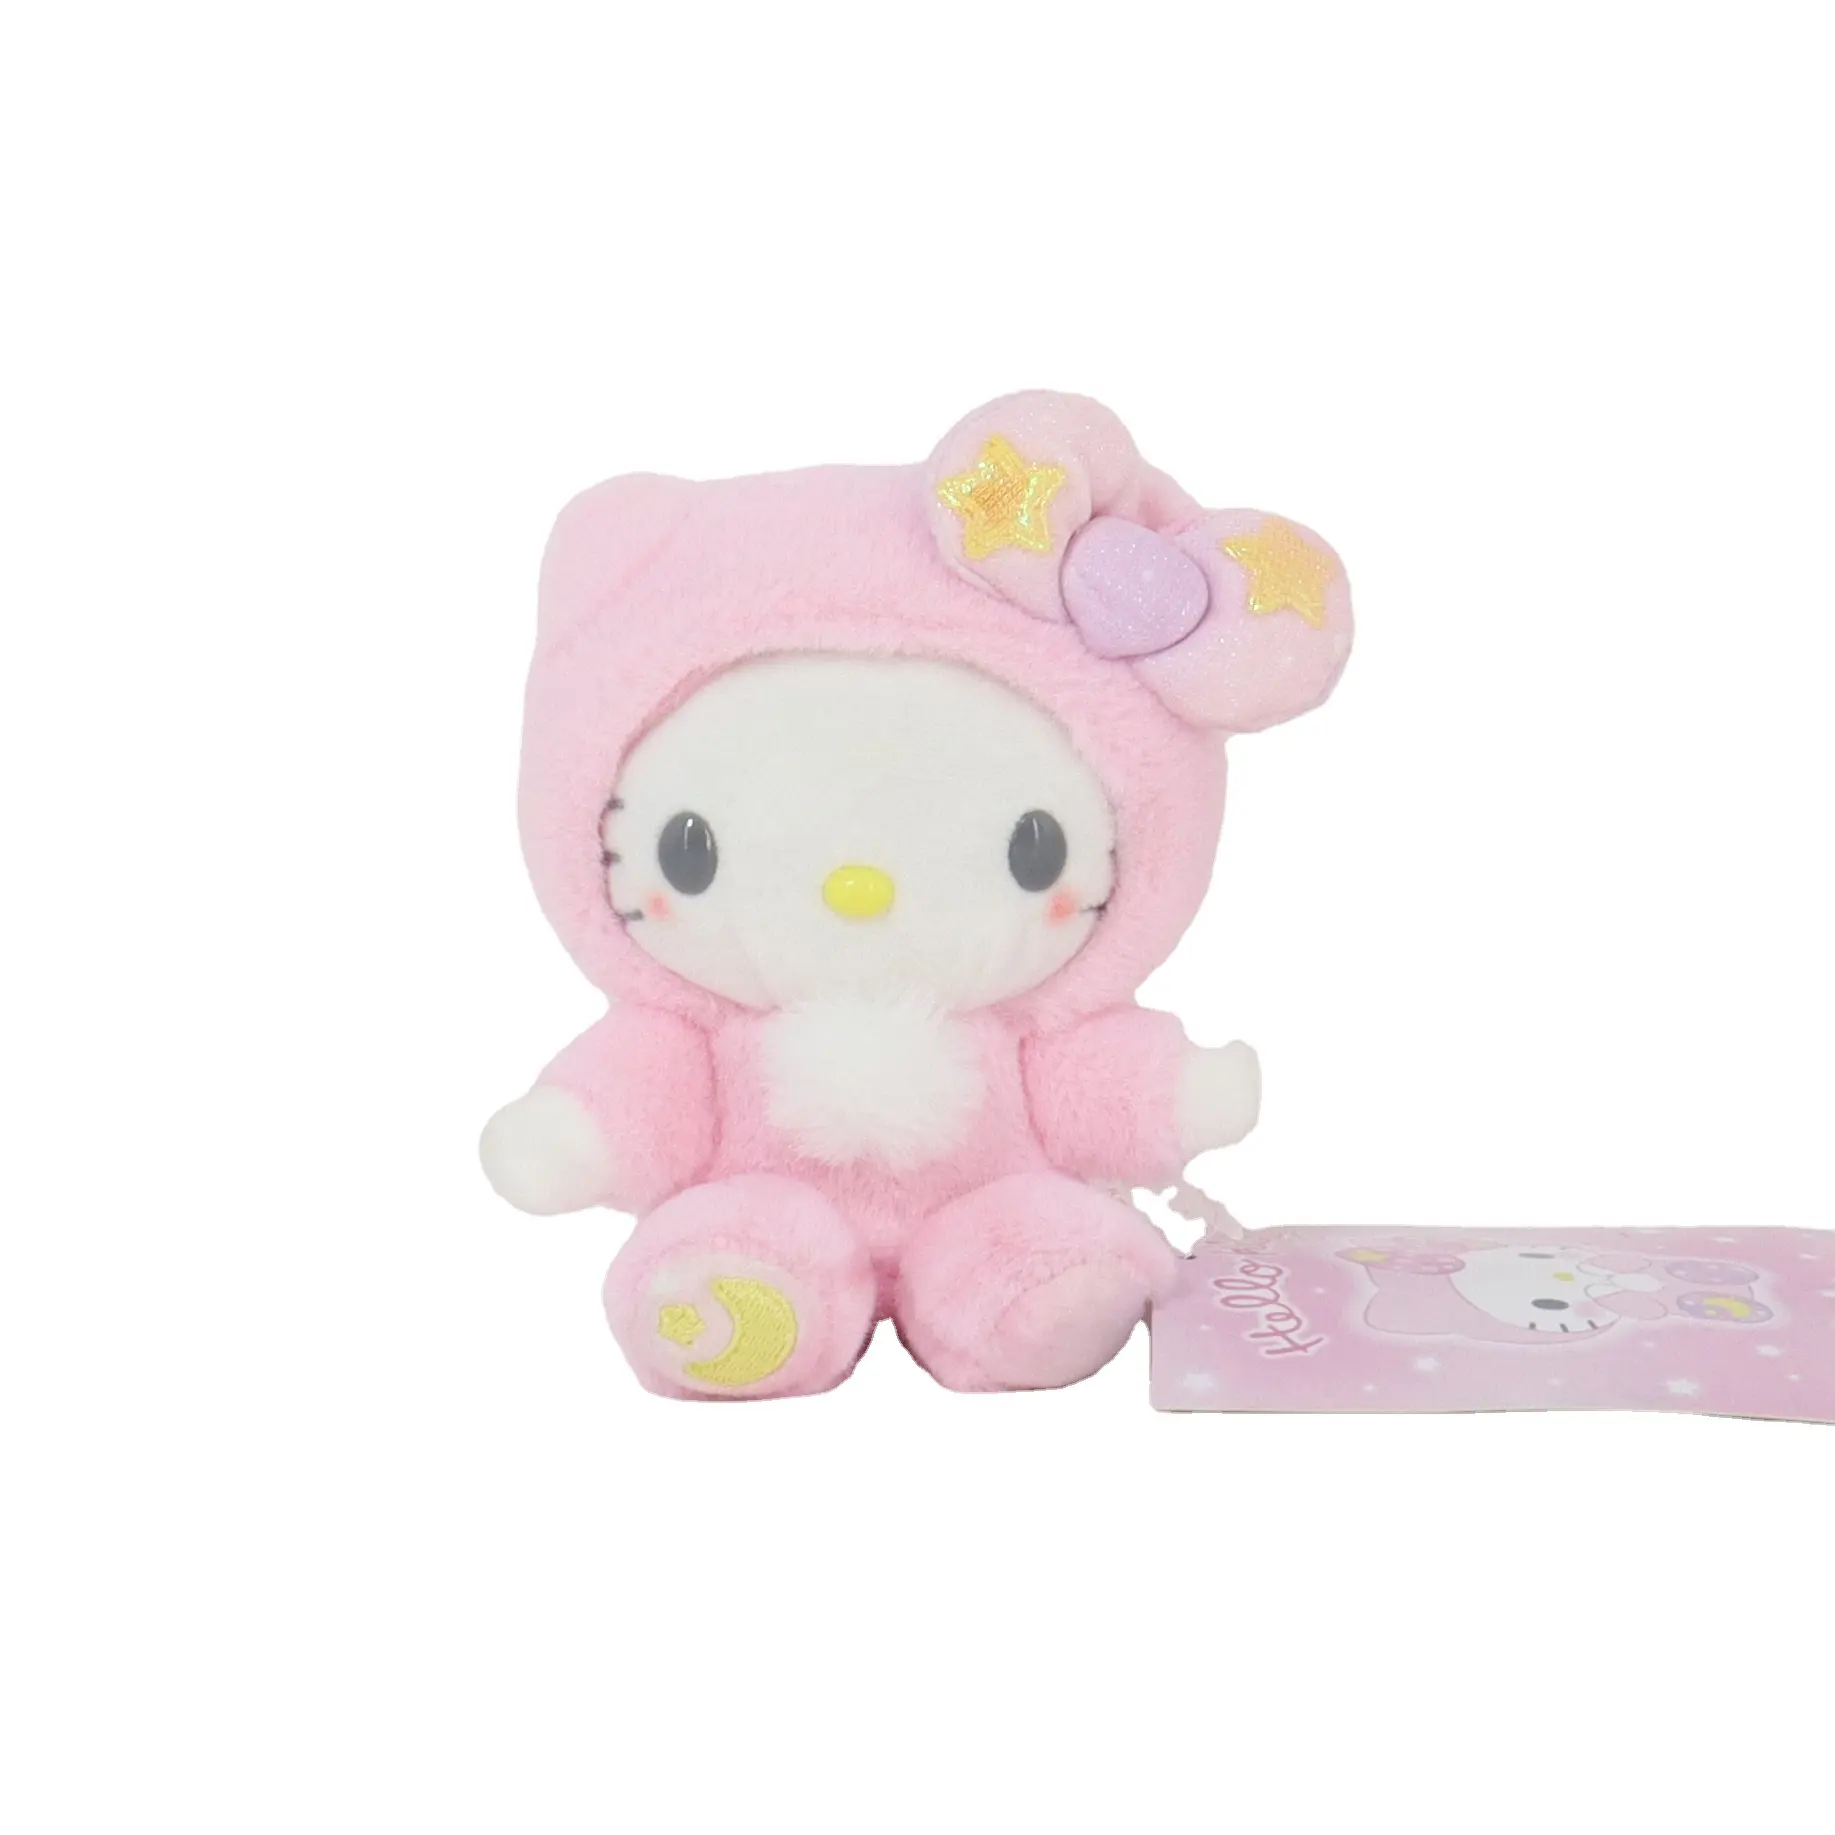 Wholesale Japan cute plush toy anime figure kuromi plush stuffed animals toys My Melody